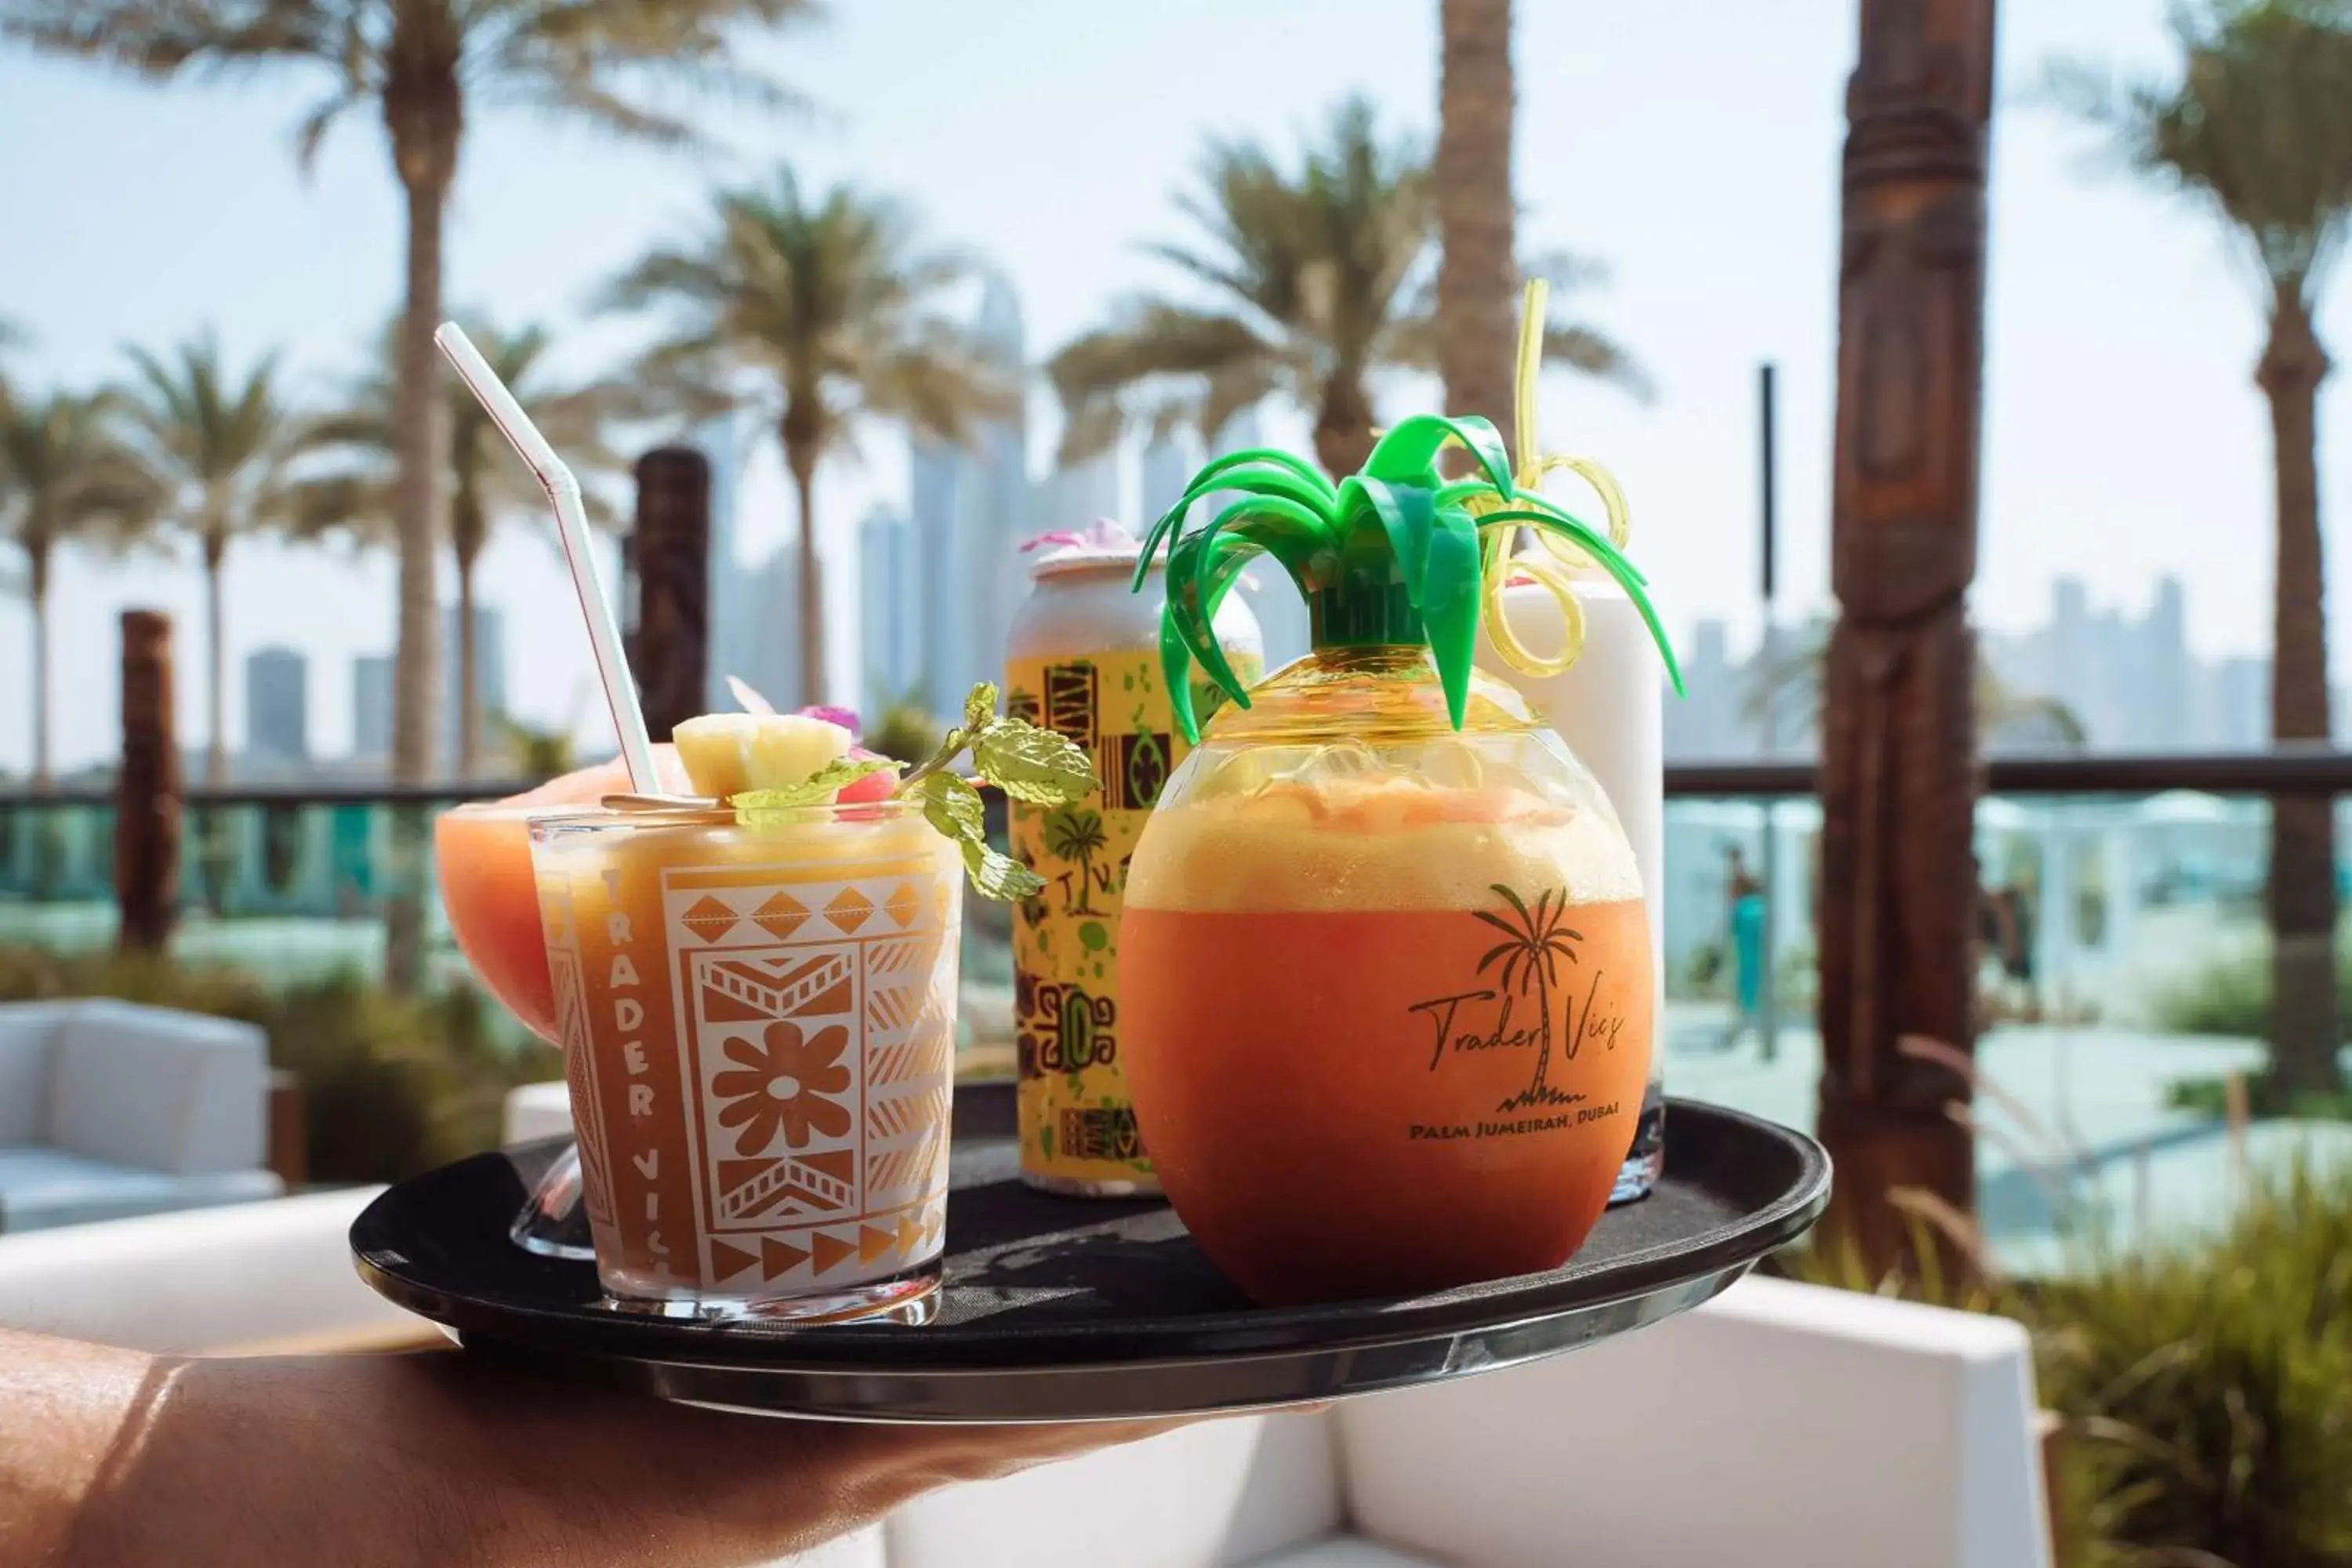 Dining area in Hilton Dubai Palm Jumeirah